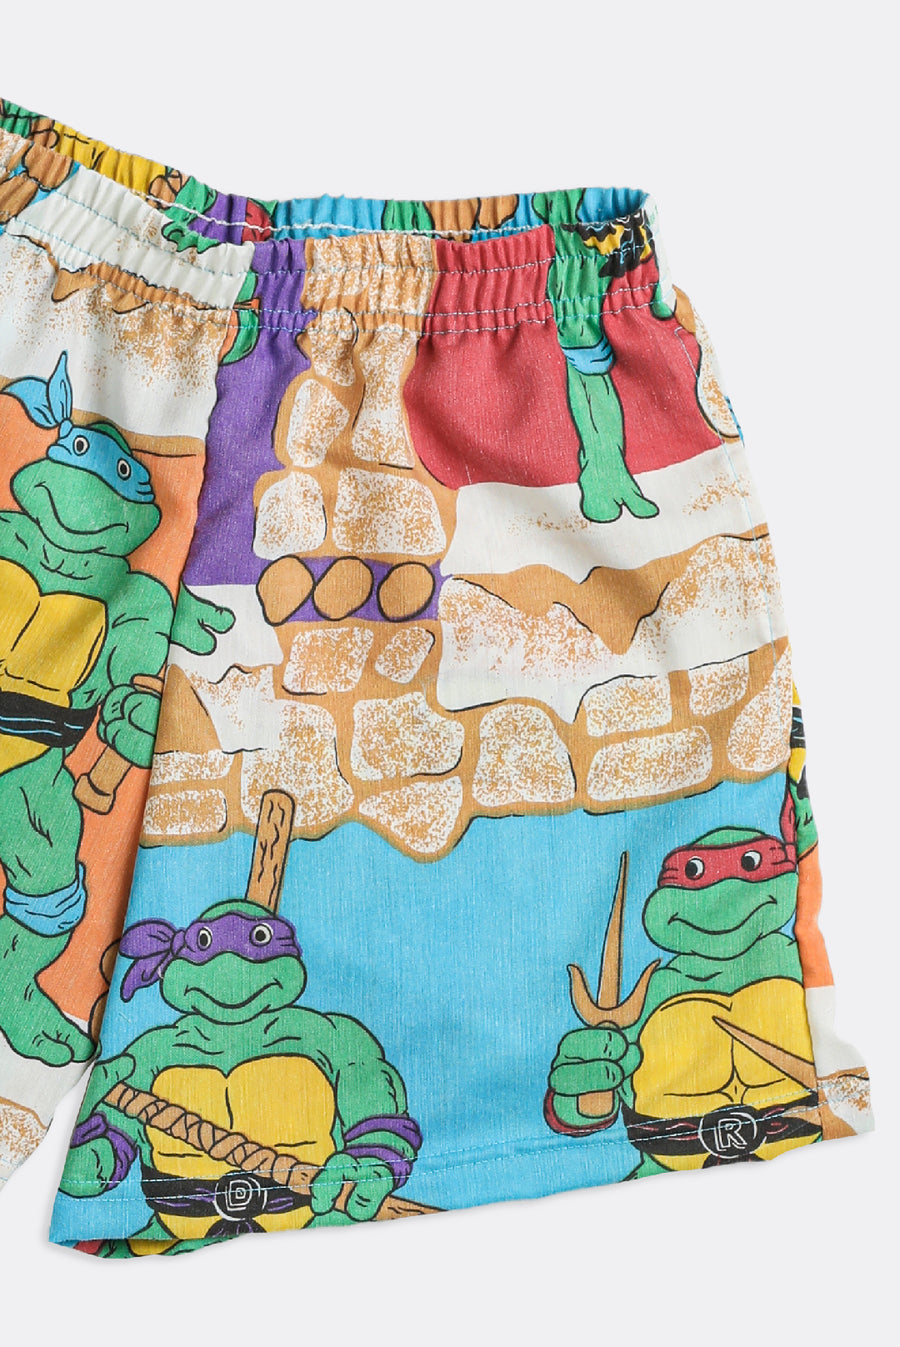 Unisex Rework Teenage Mutant Ninja Turtle Boxer Shorts - XS